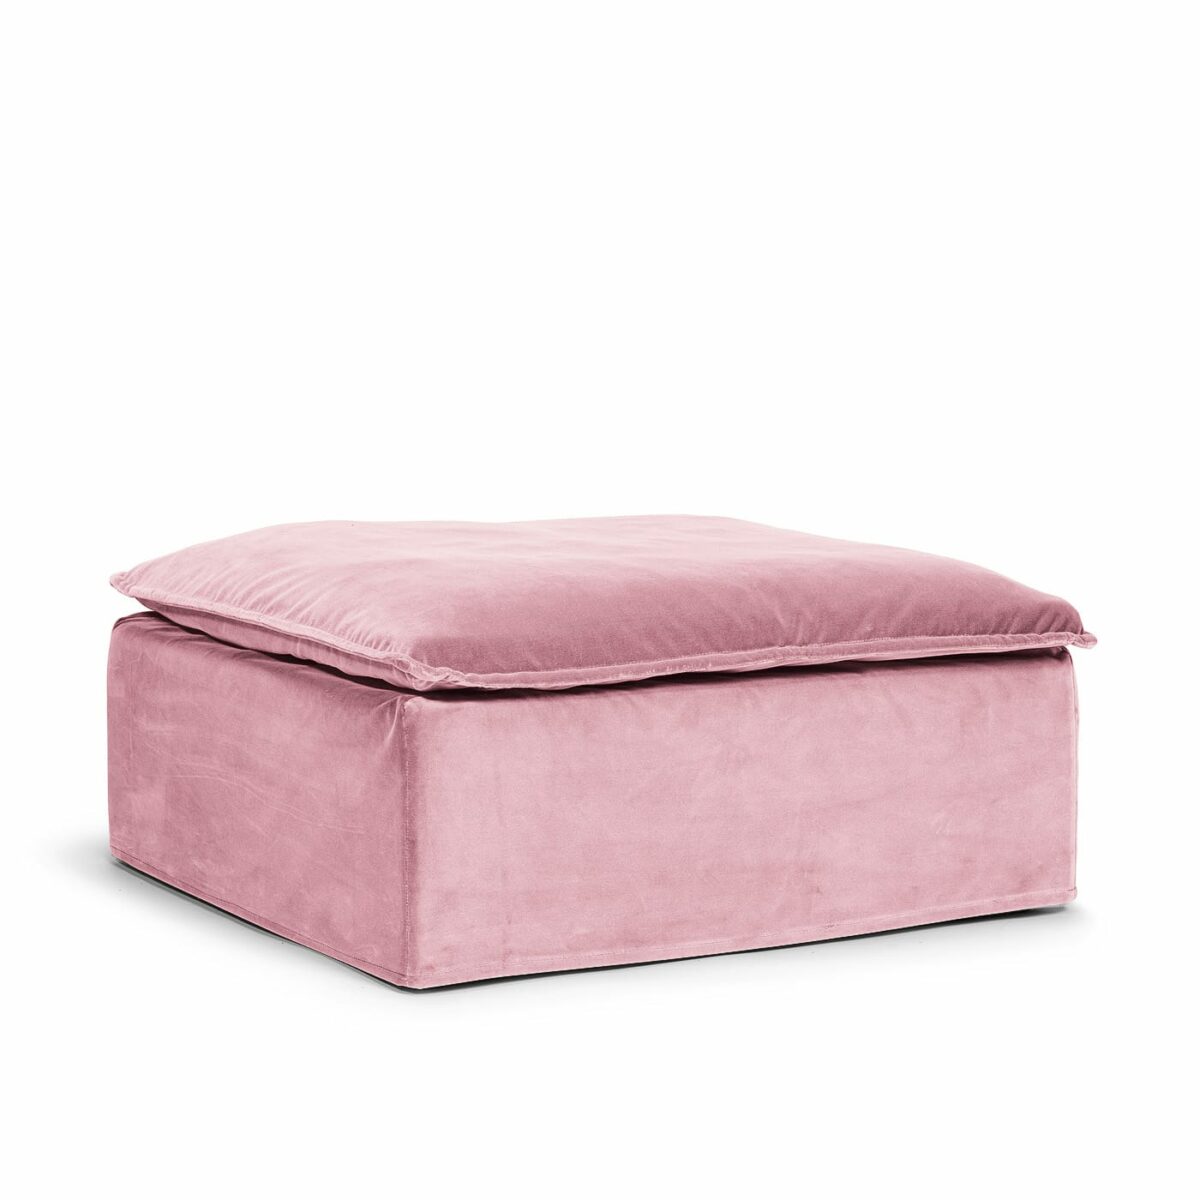 Luca Original 2-Seat Sofa Dusty Pink